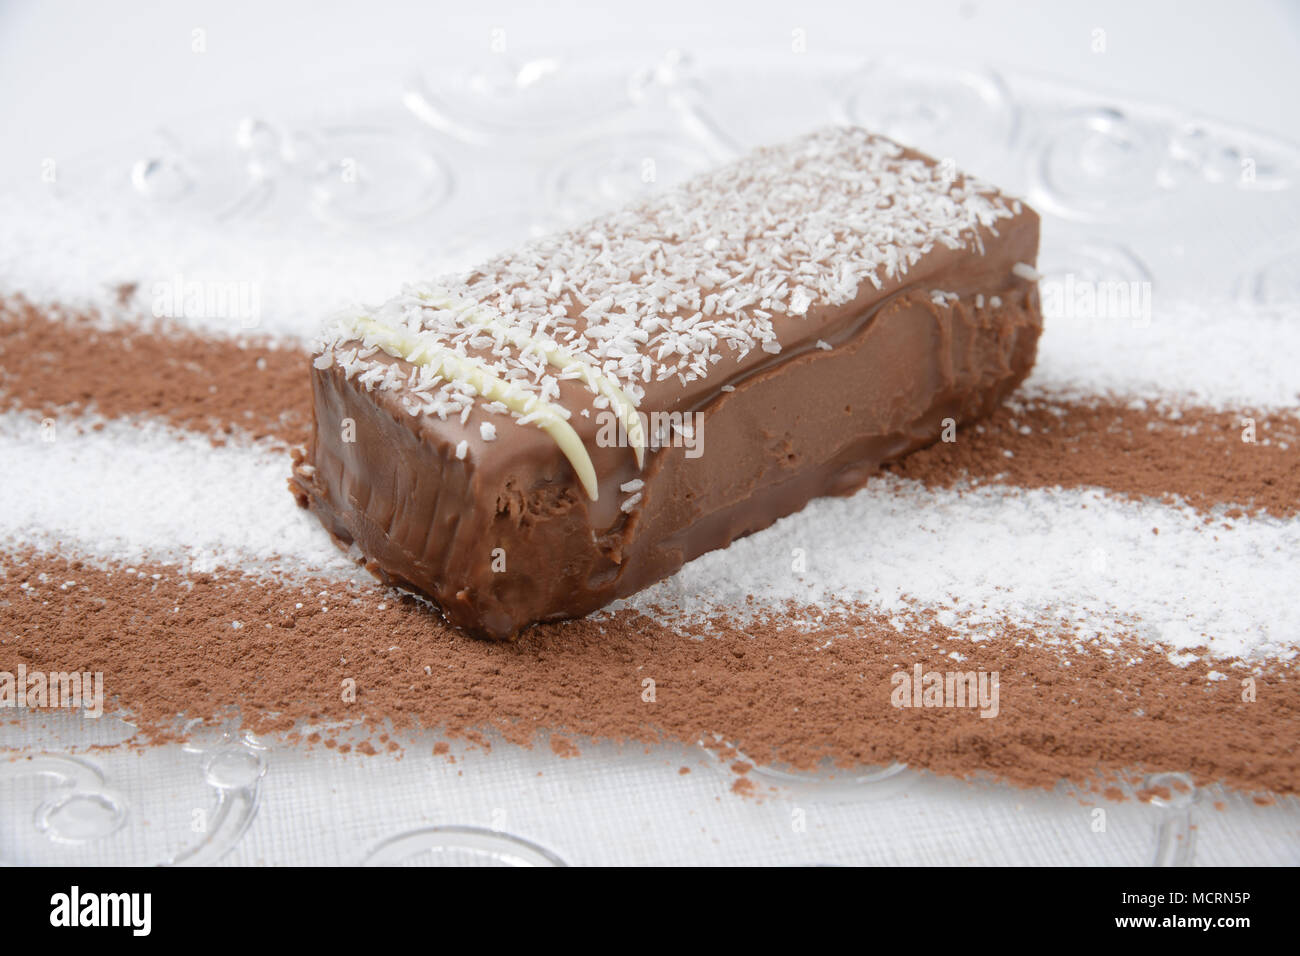 Chocolate cream cake garnished with coconut shavings Stock Photo